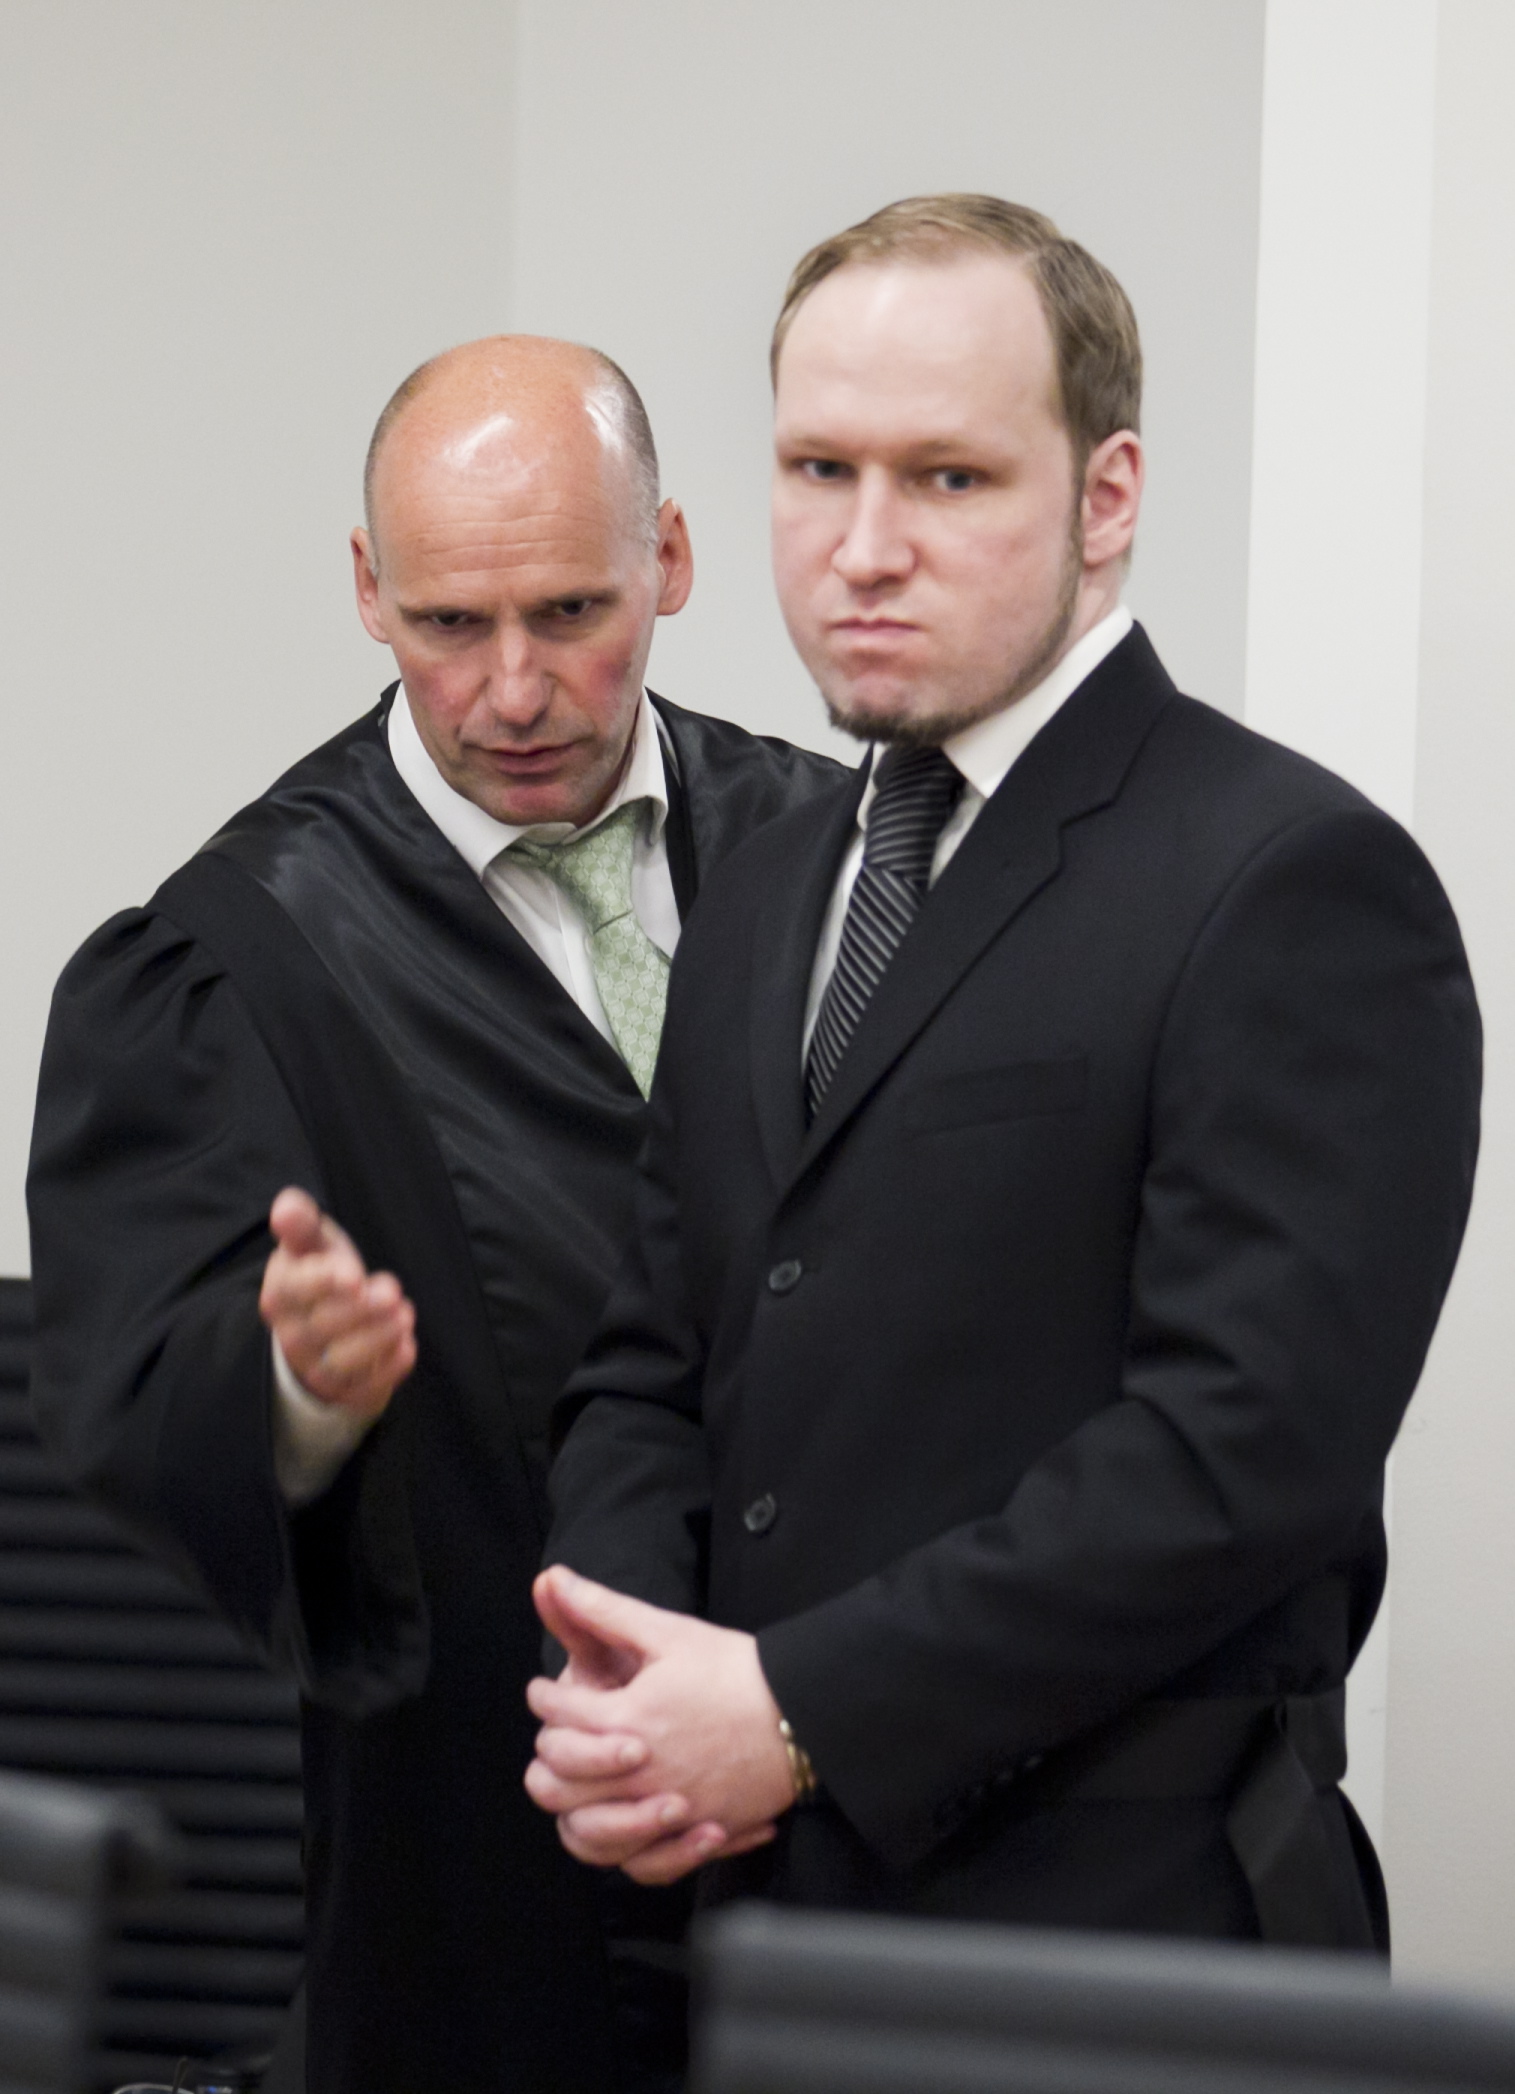 Oslo, Anders Behring Breivik, Terrordåd, Alpha Kallon, terrorist, Massmördare, Liberia